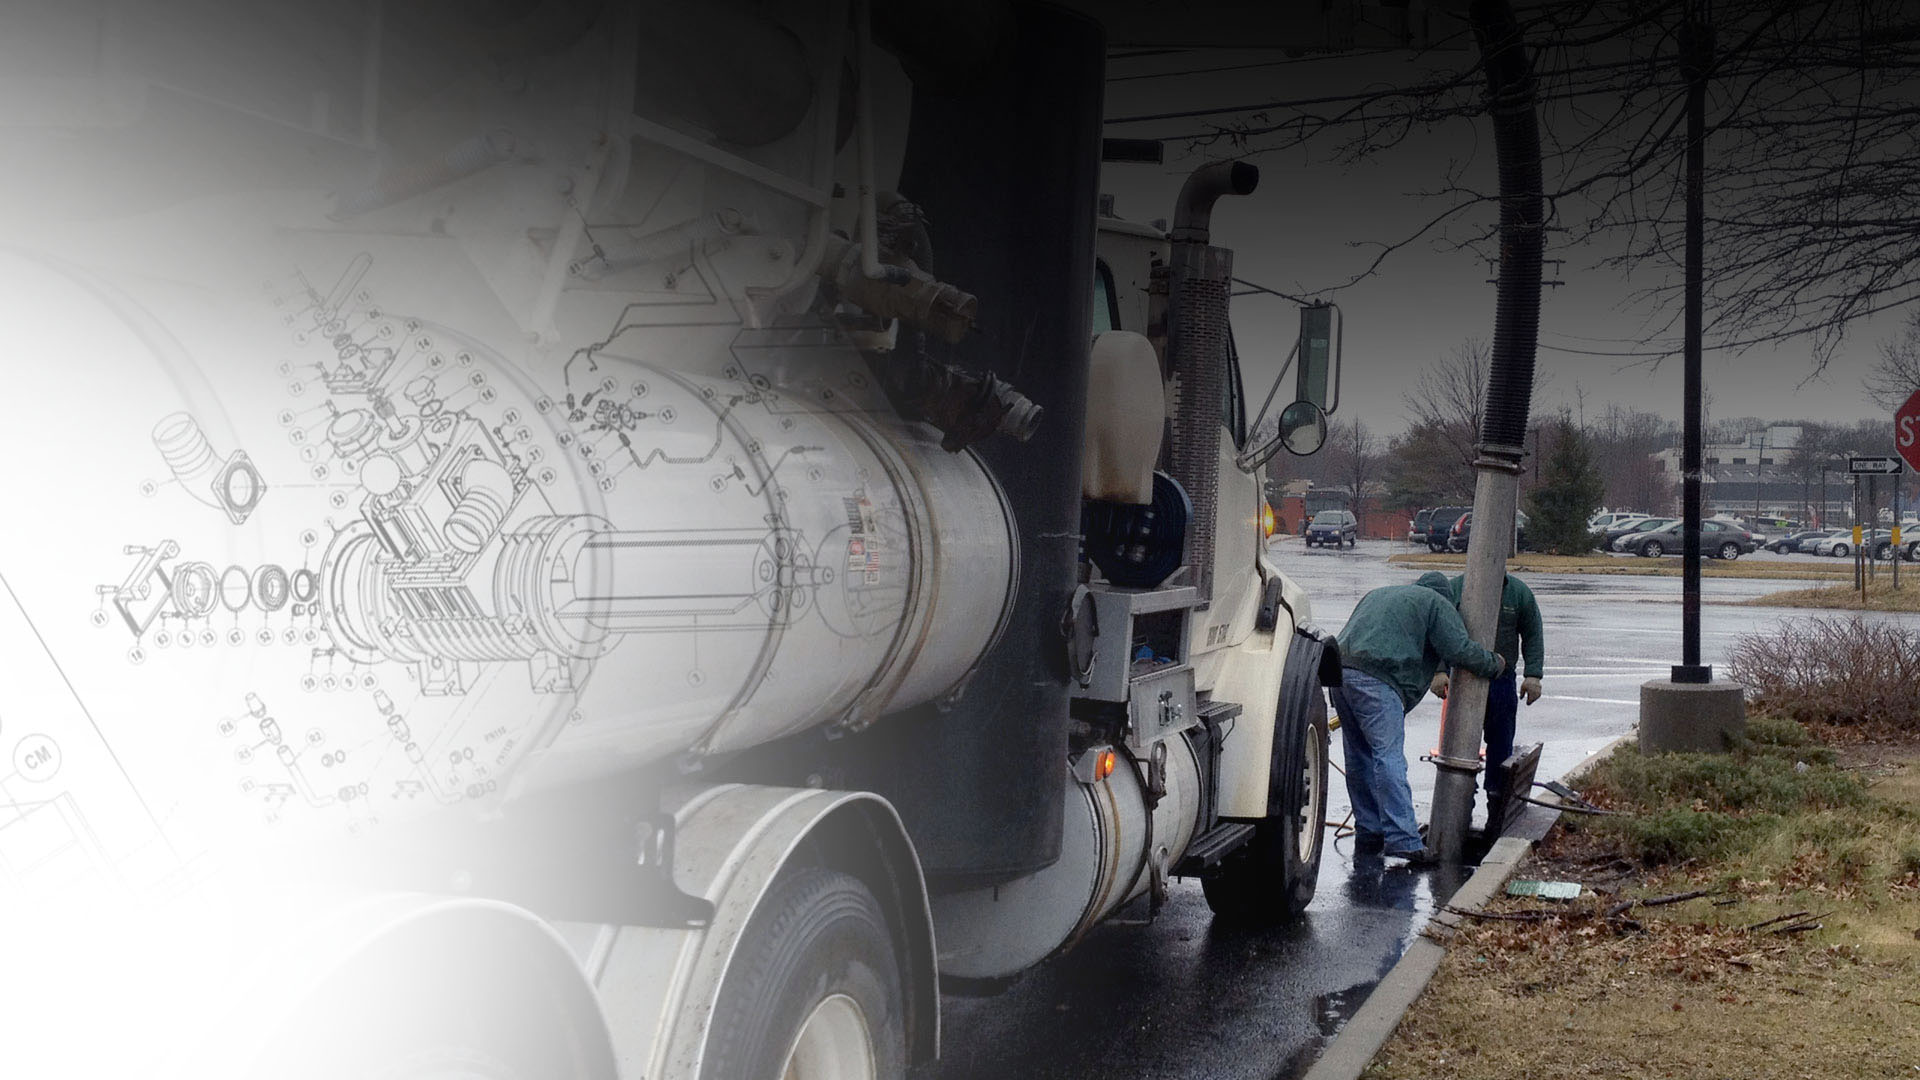 All Storm Drains Inc. | Vacuum Truck Service | Nassau & Suffolk County, Long Island, NY | Phone: 516.825.1010 Fax: 631.475.2898 | George@AllStormDrains.com